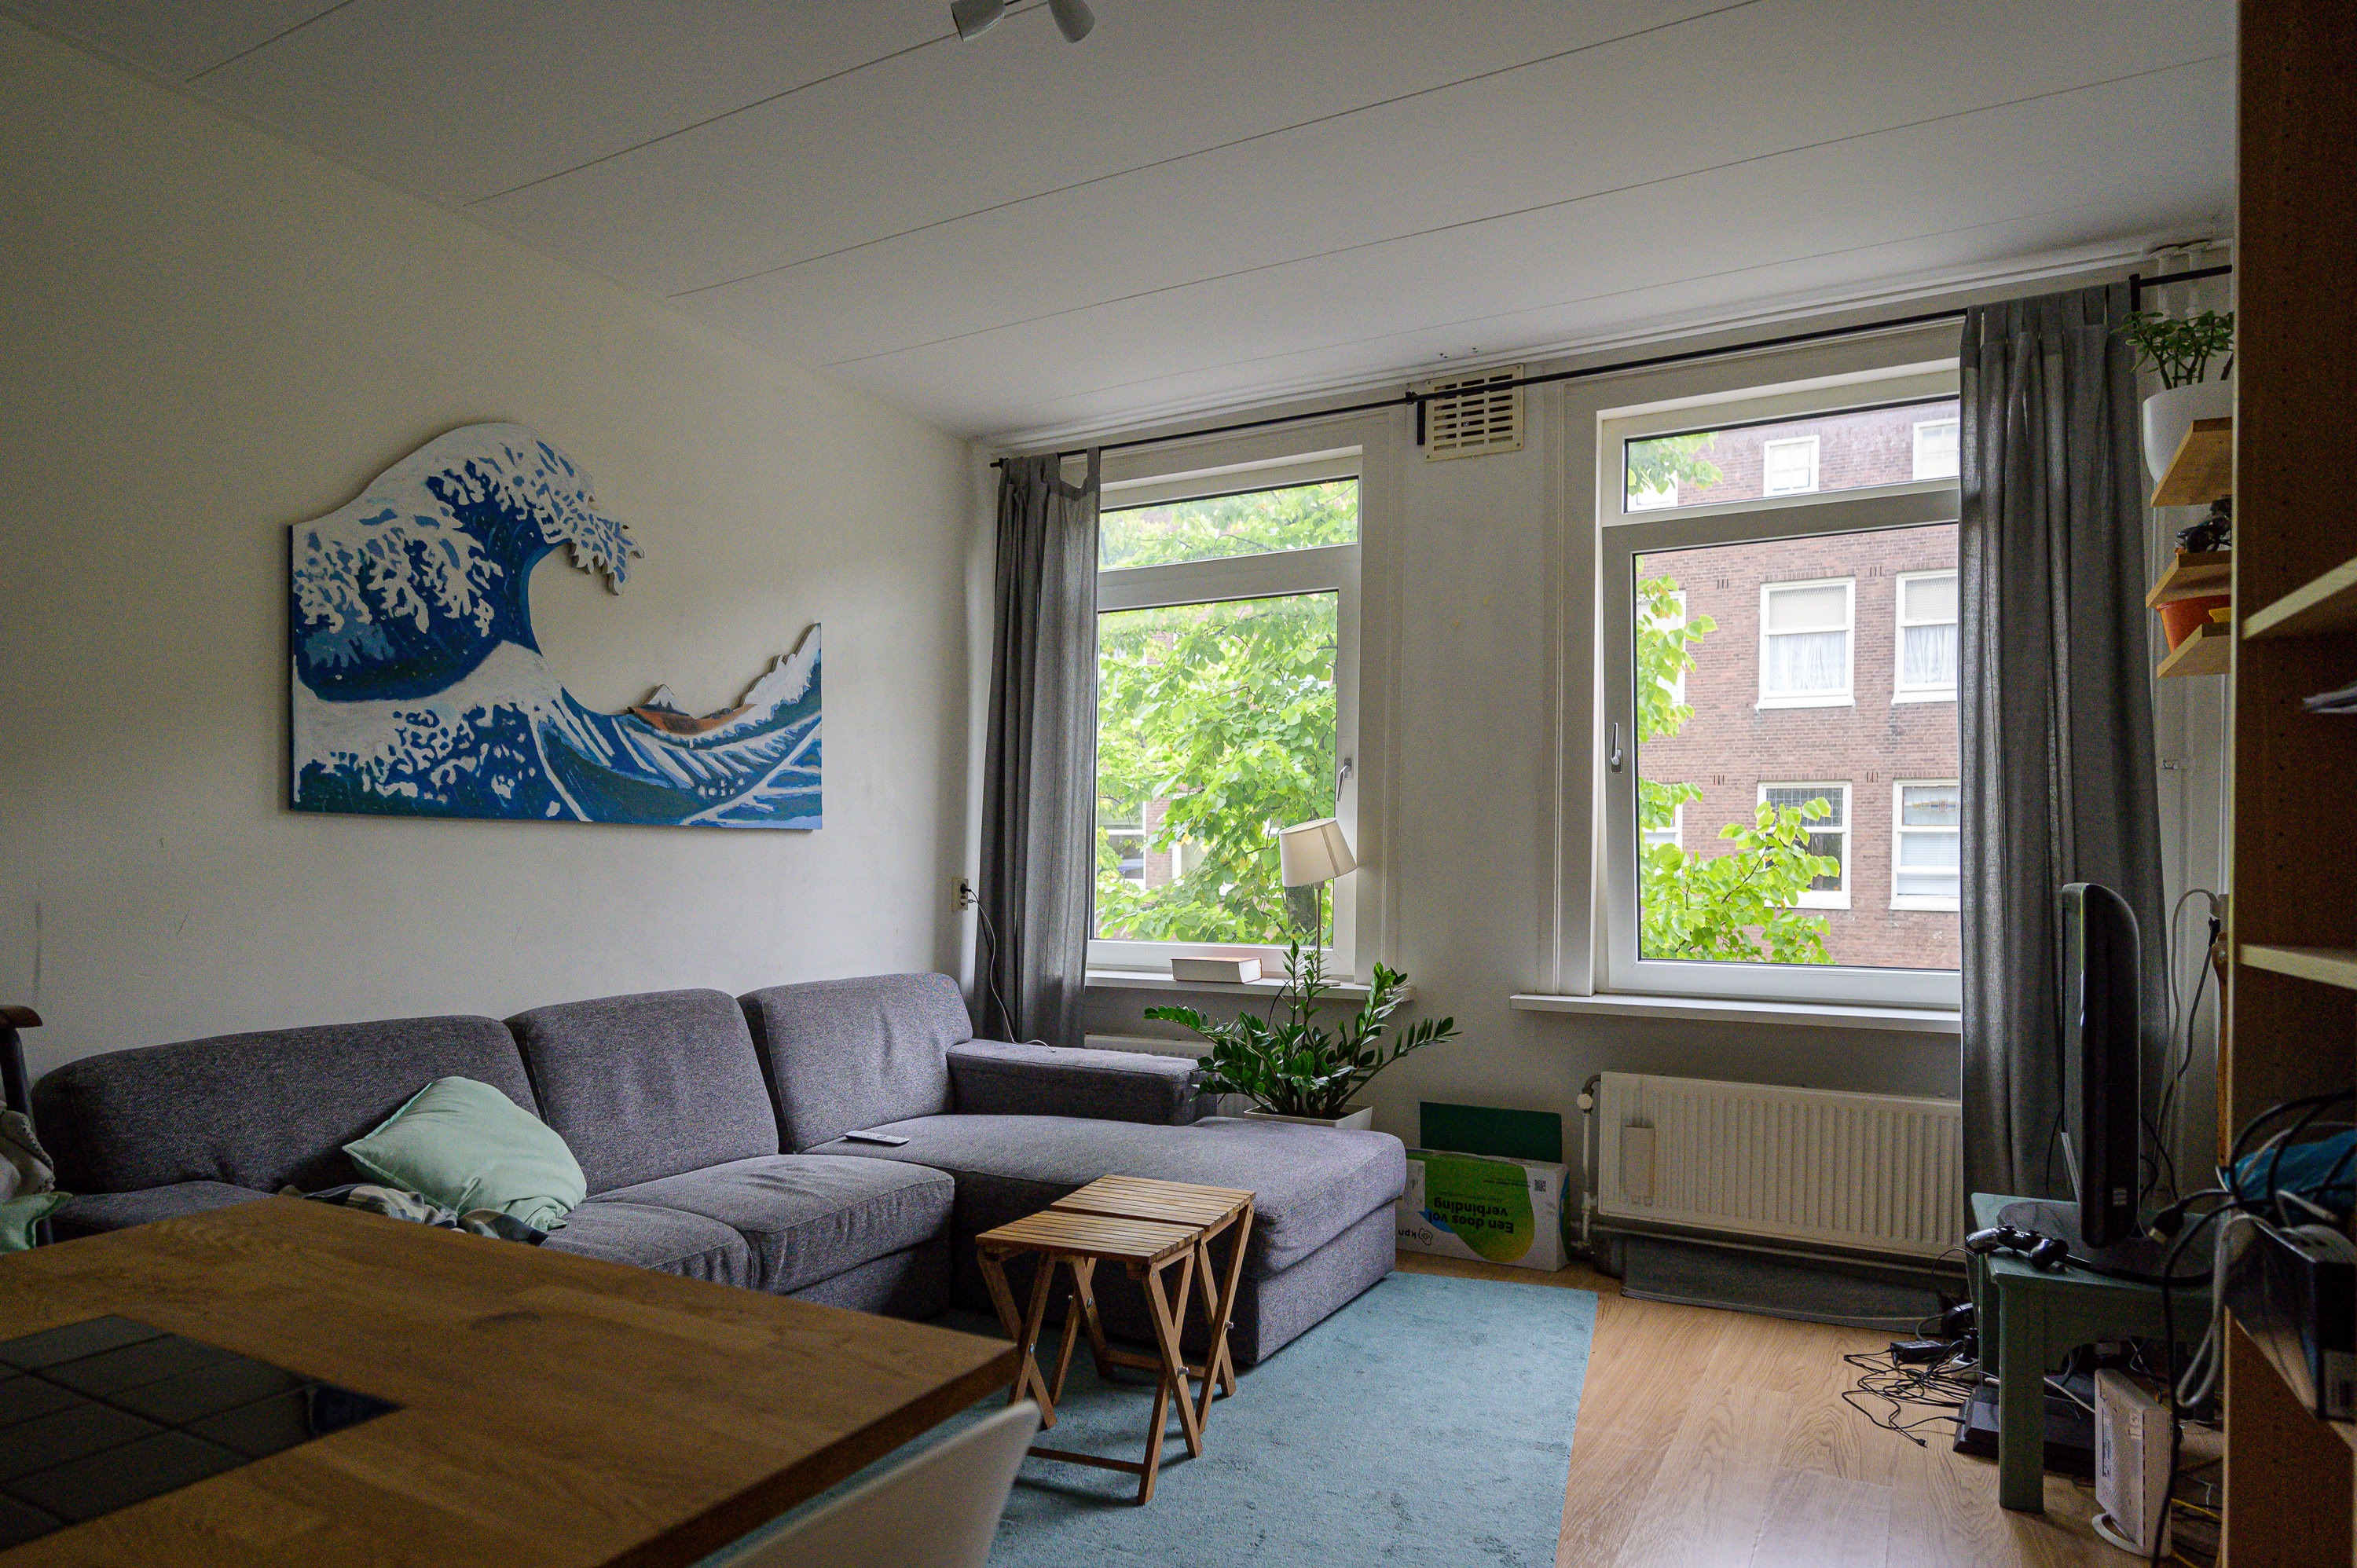 Woning / appartement - Amsterdam - Vijf appartementsrechten in Amsterdam 40